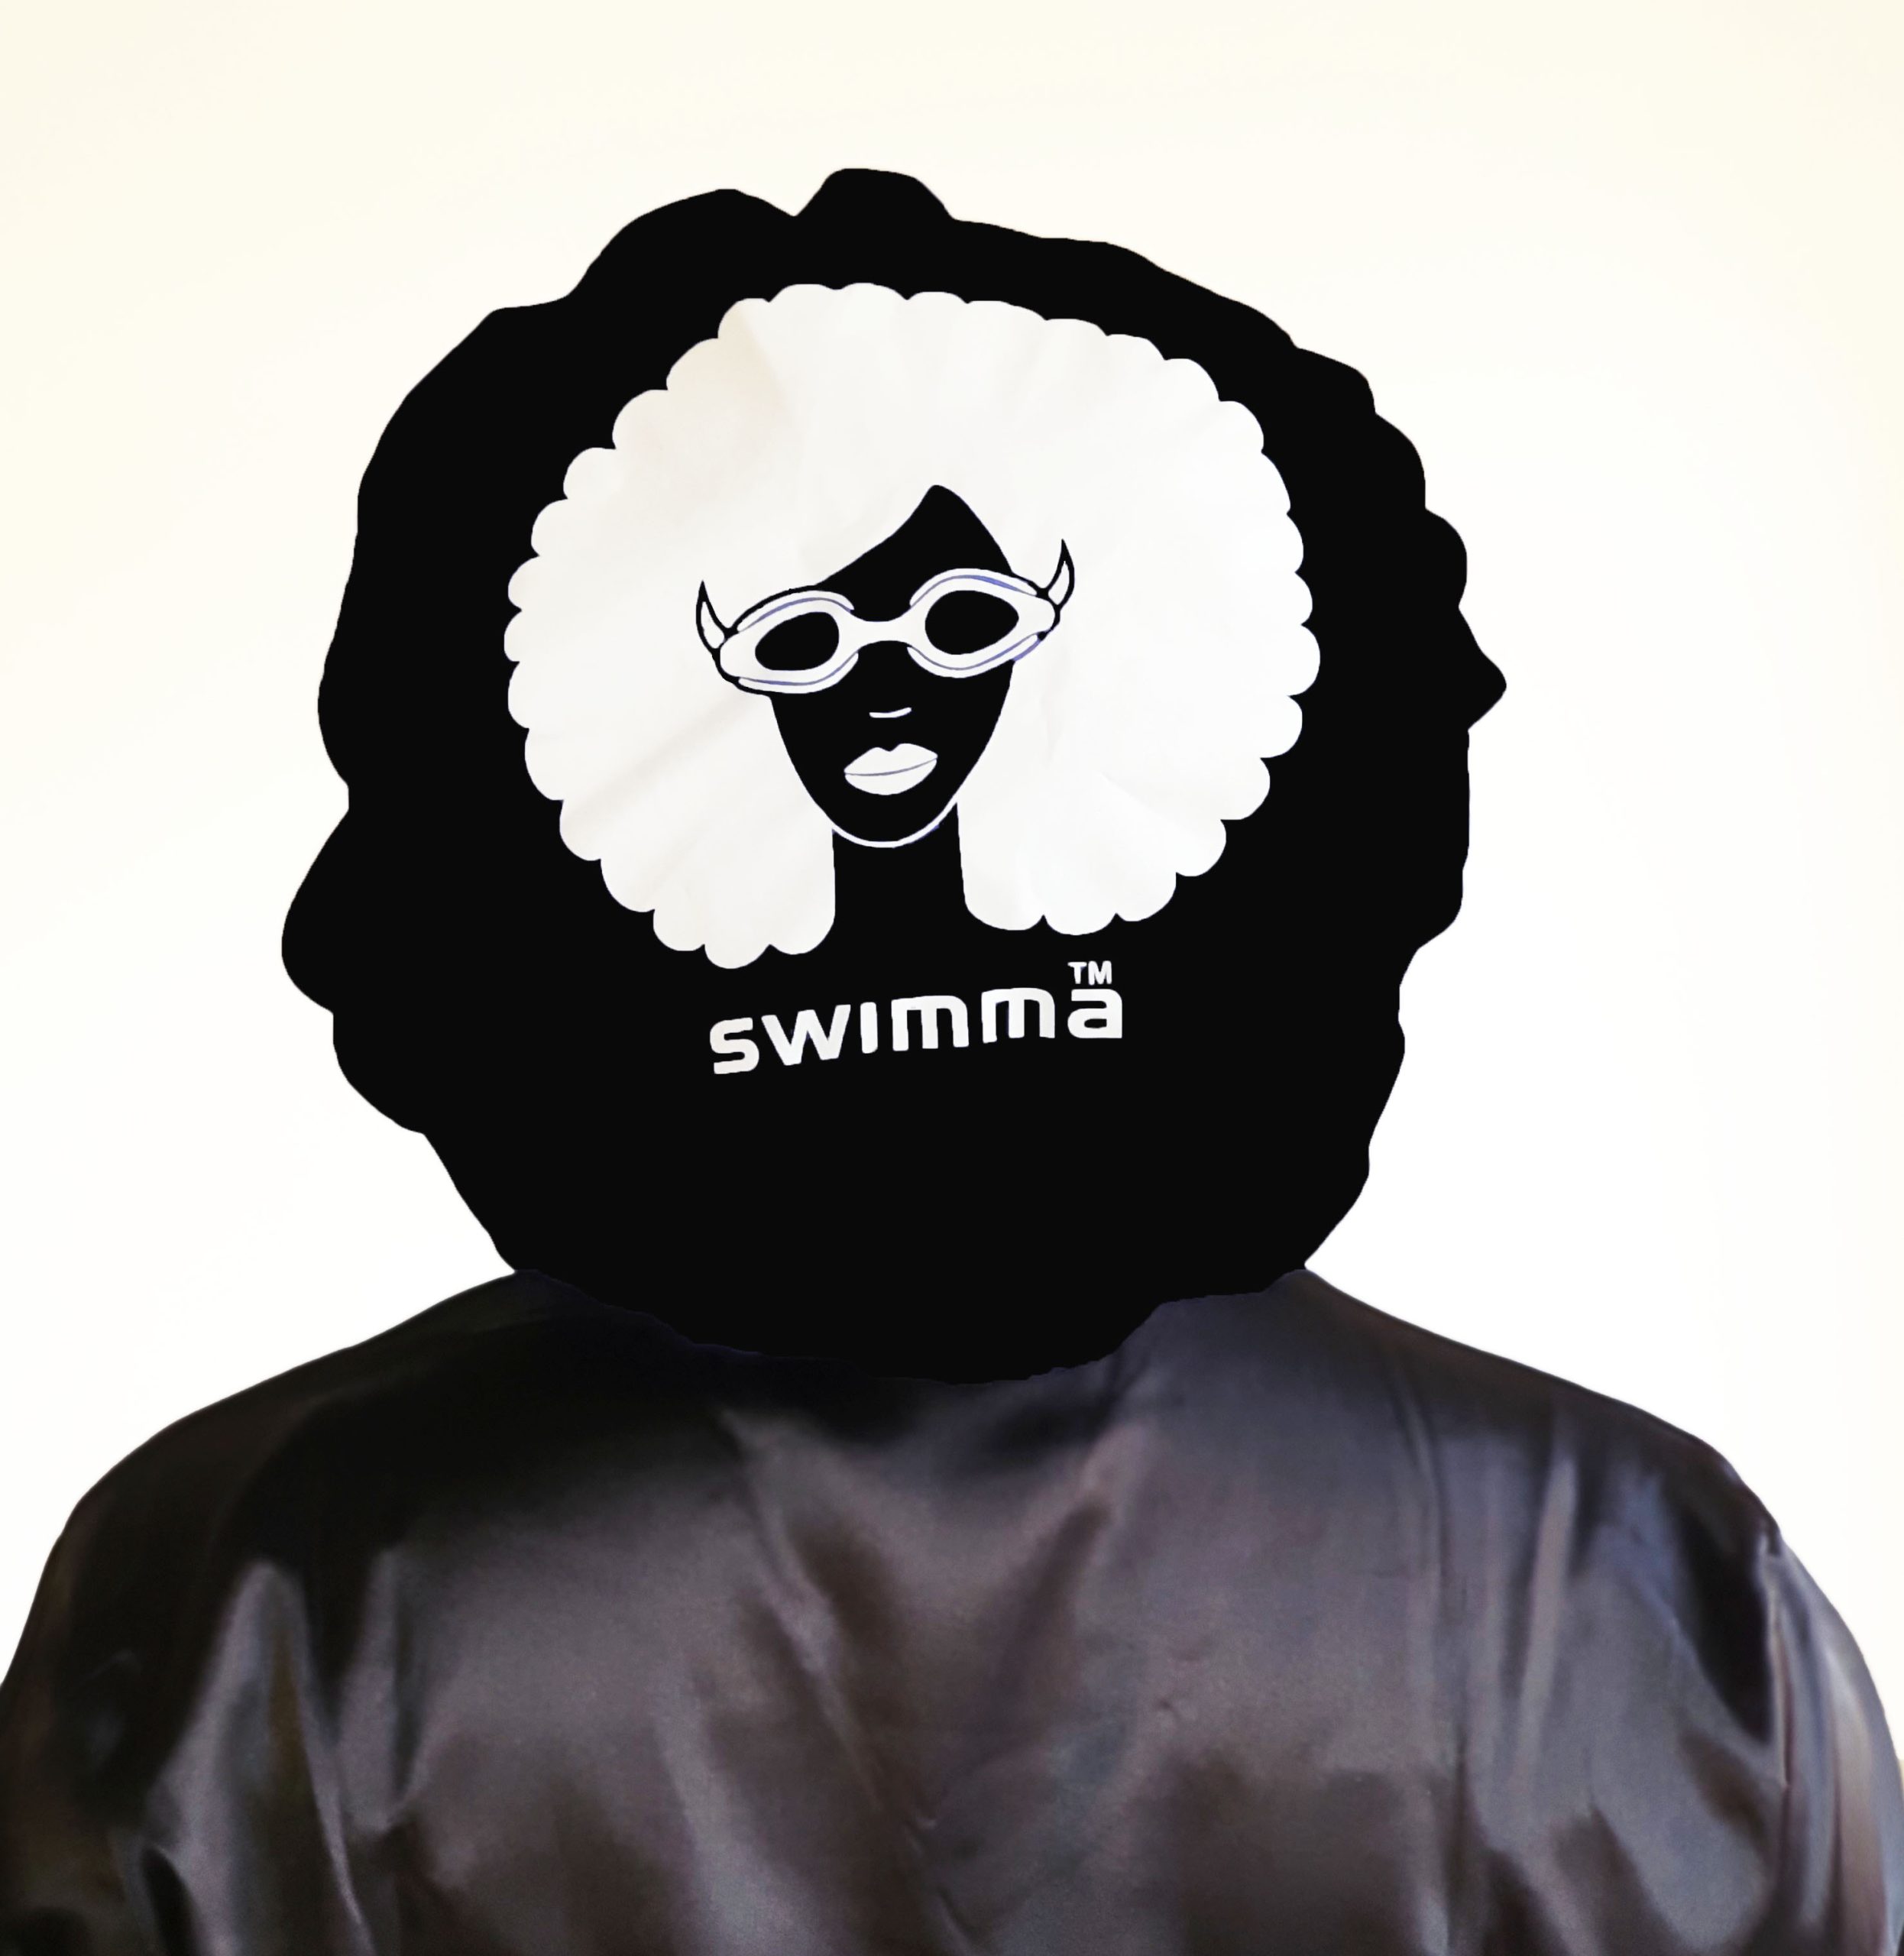 Afro-Superlarge Swimma Head Black Back copy